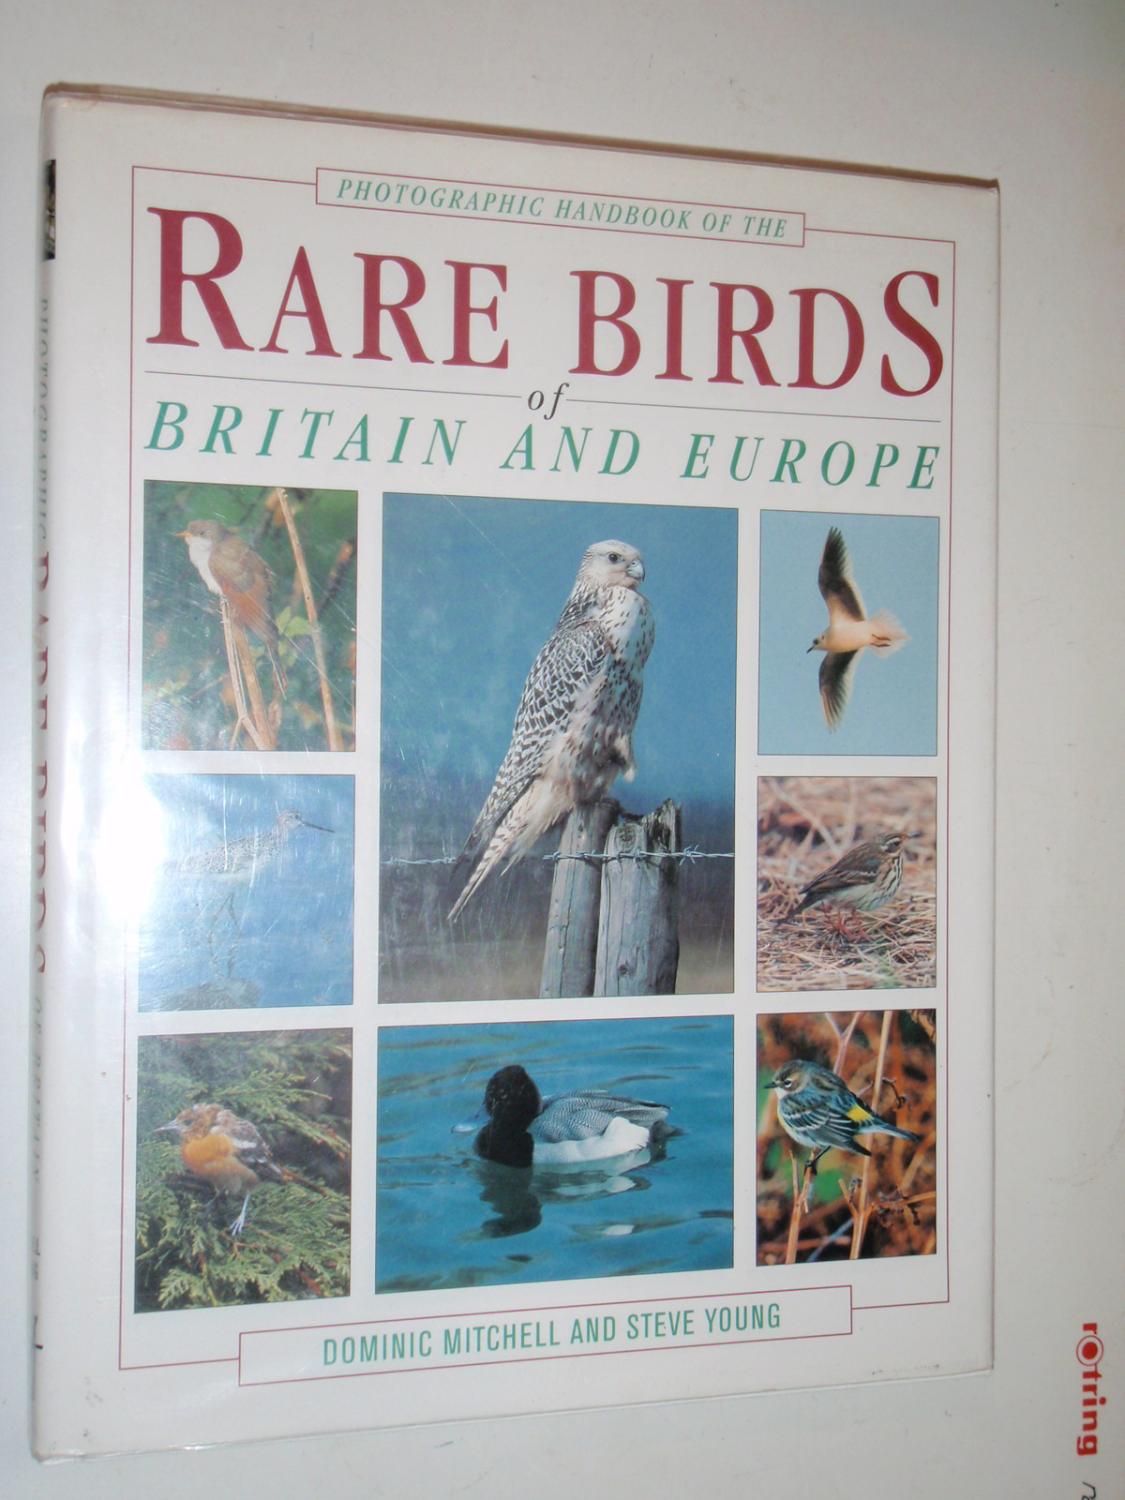 Photographic Handbook to the Rare Birds of Britain and Europe